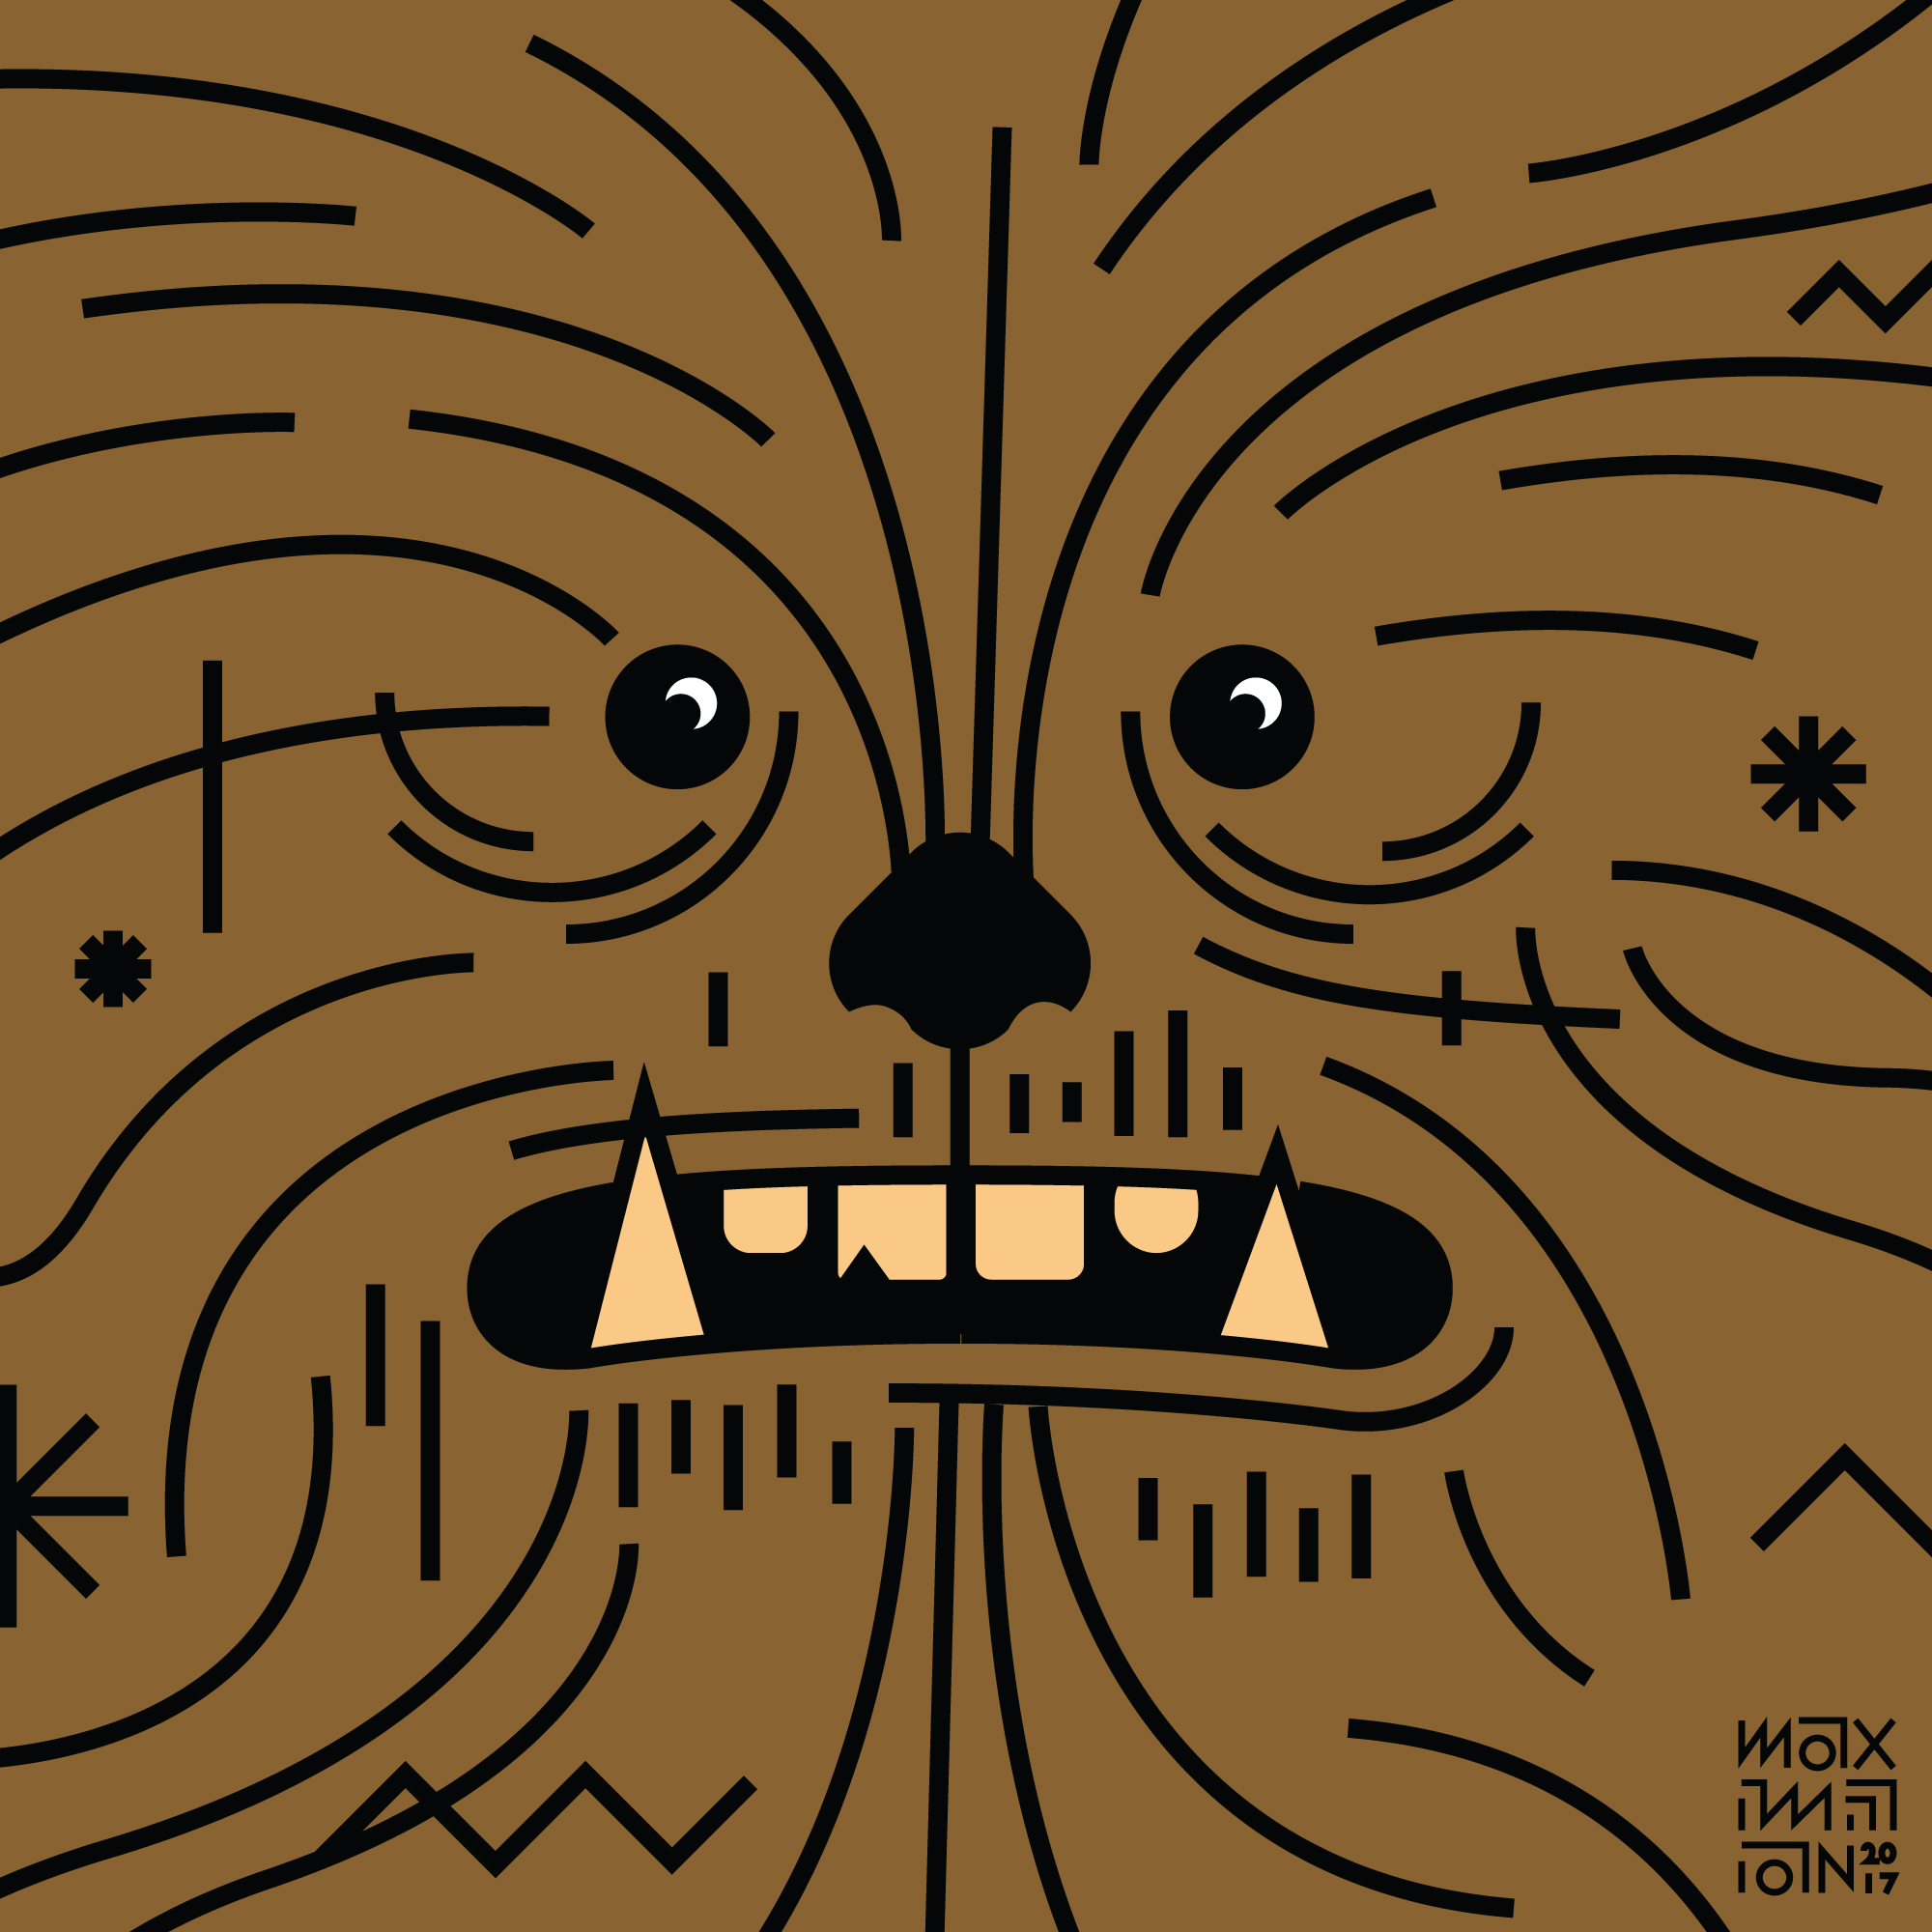 Chewbacca Star Wars illustration by Maximillian Piras